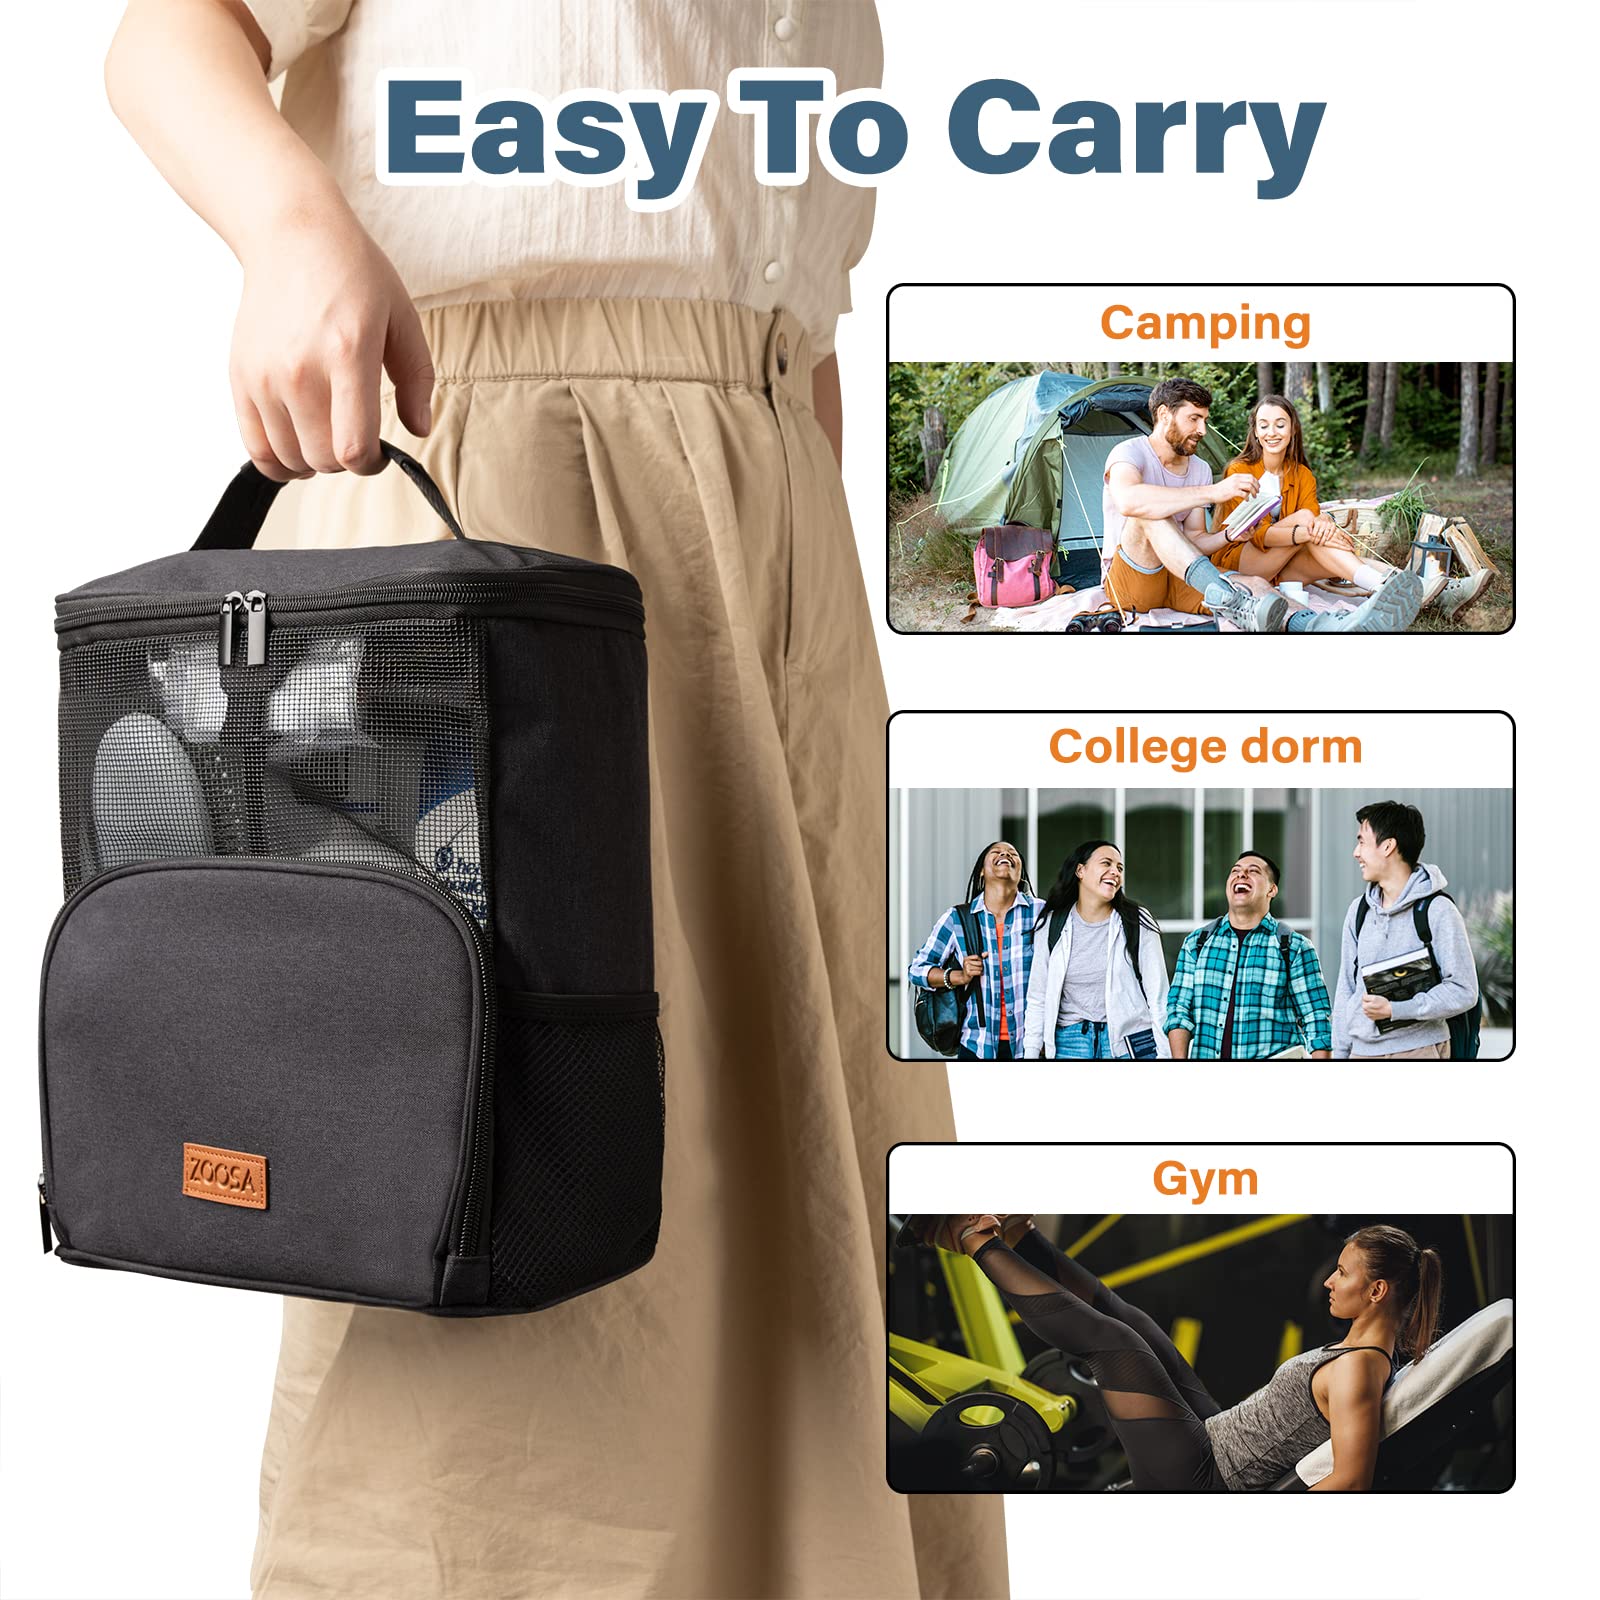 Zoosa Gym Shower Bag, Portable Mesh Shower Caddy Bag with Phone Pocket for Dorm, Full Size Bottle Compatible, 2022 Upgraded Hanging Travel Shower Bag